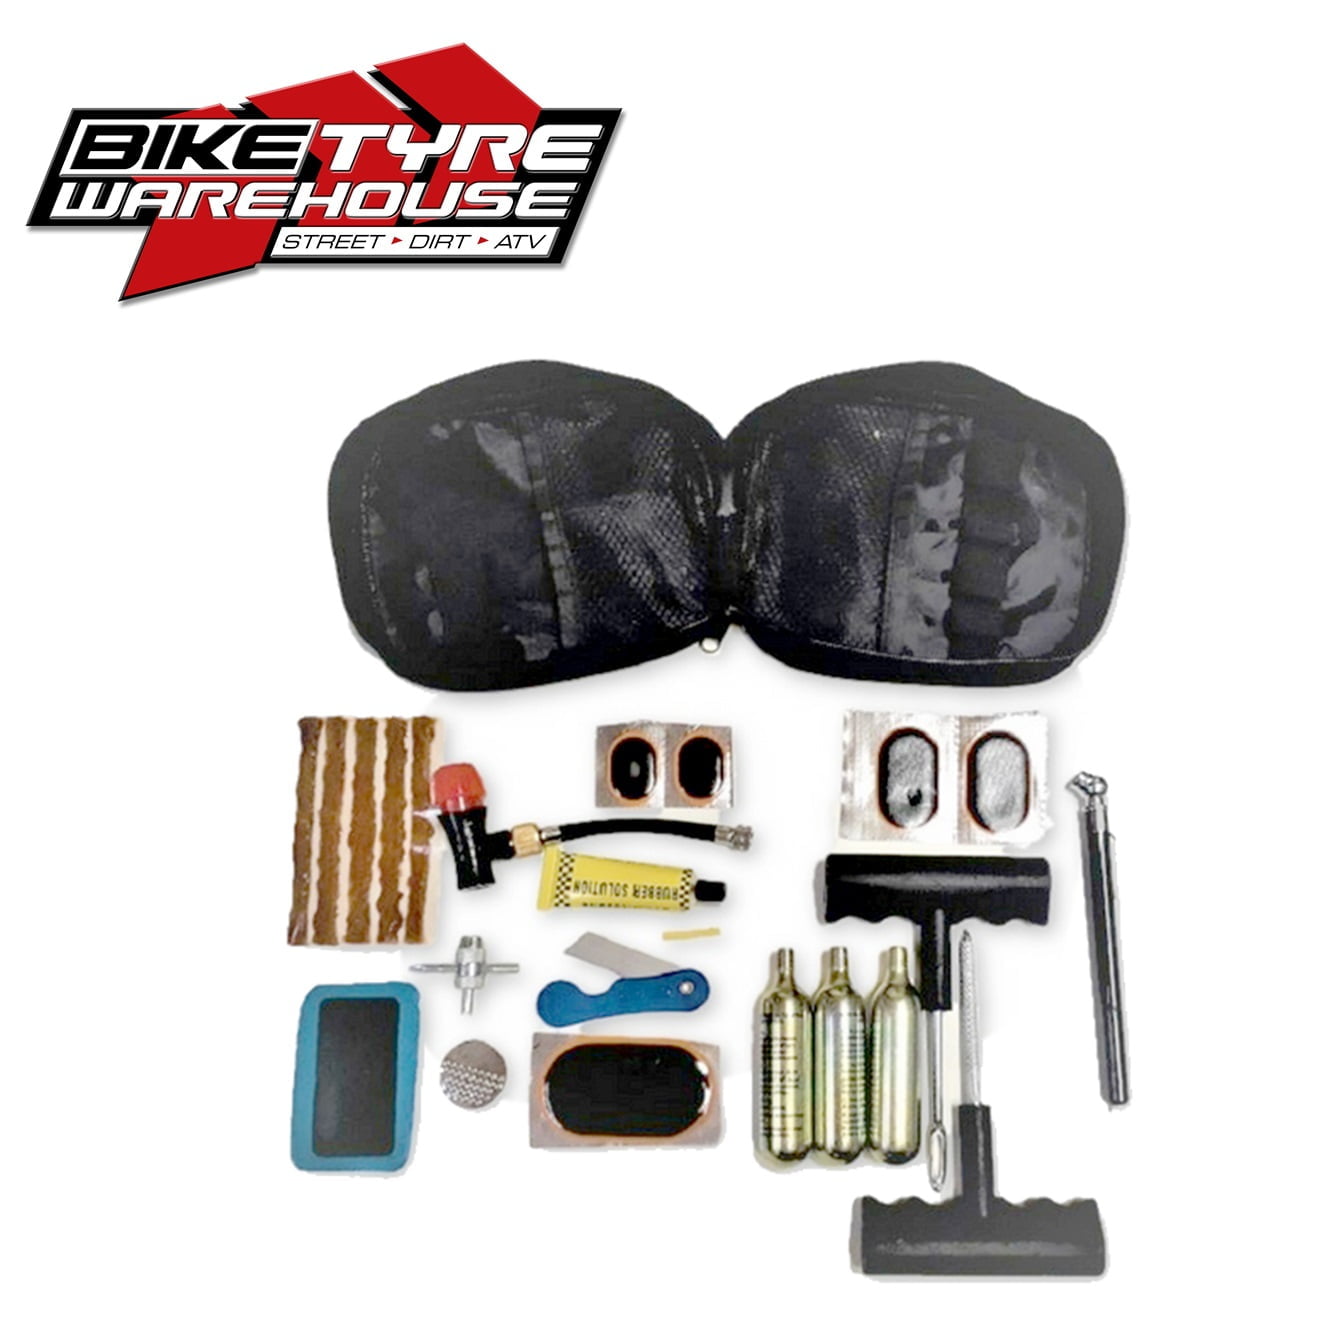 Bike Tyre Warehouse Prizes Tyre Repair Kit